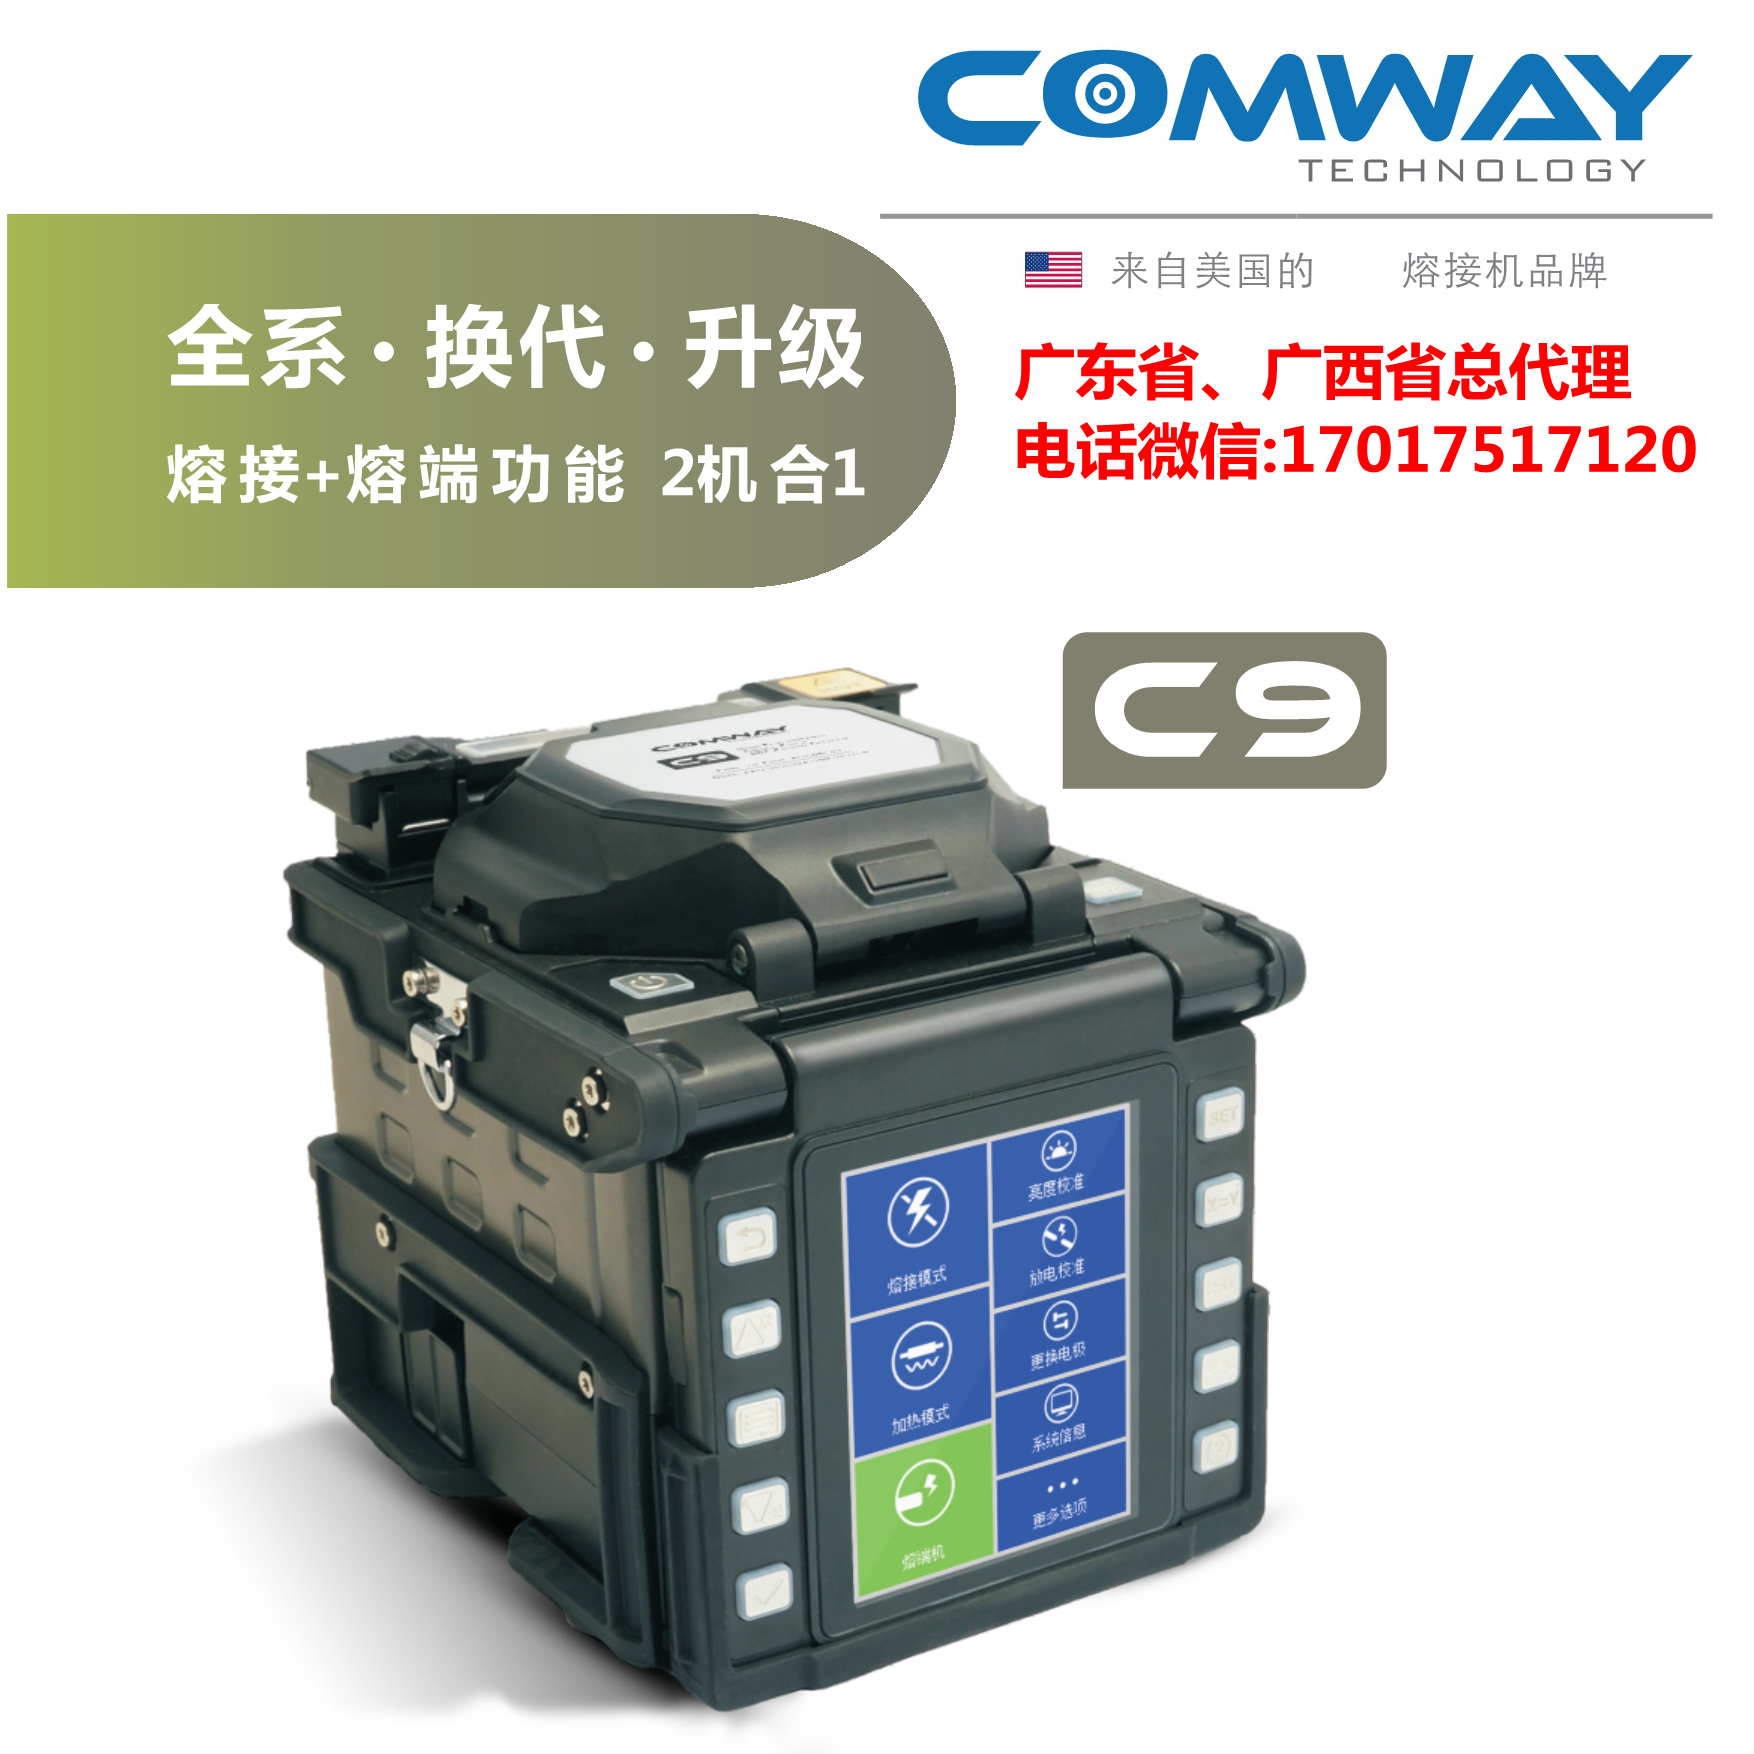 COMWAY C9/美国康未 C9 6马达干线光纤熔接机